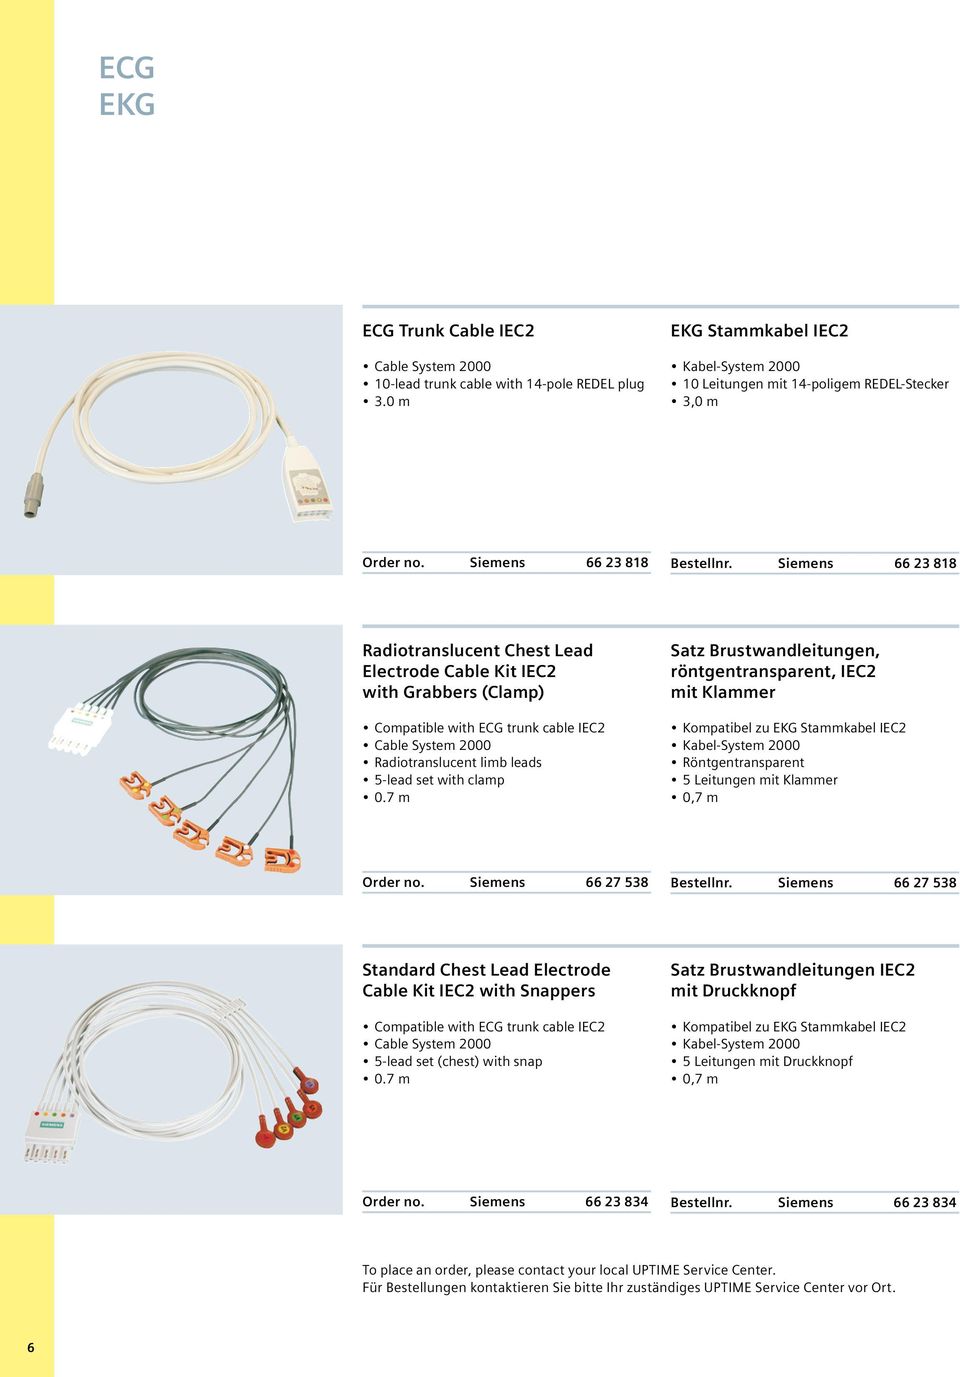 7 m Satz Brustwandleitungen, röntgentransparent, IEC2 mit Klammer Kompatibel zu EKG Stammkabel IEC2 Röntgentransparent 5 Leitungen mit Klammer 0,7 m Order no. Siemens 66 27 538 Bestellnr.